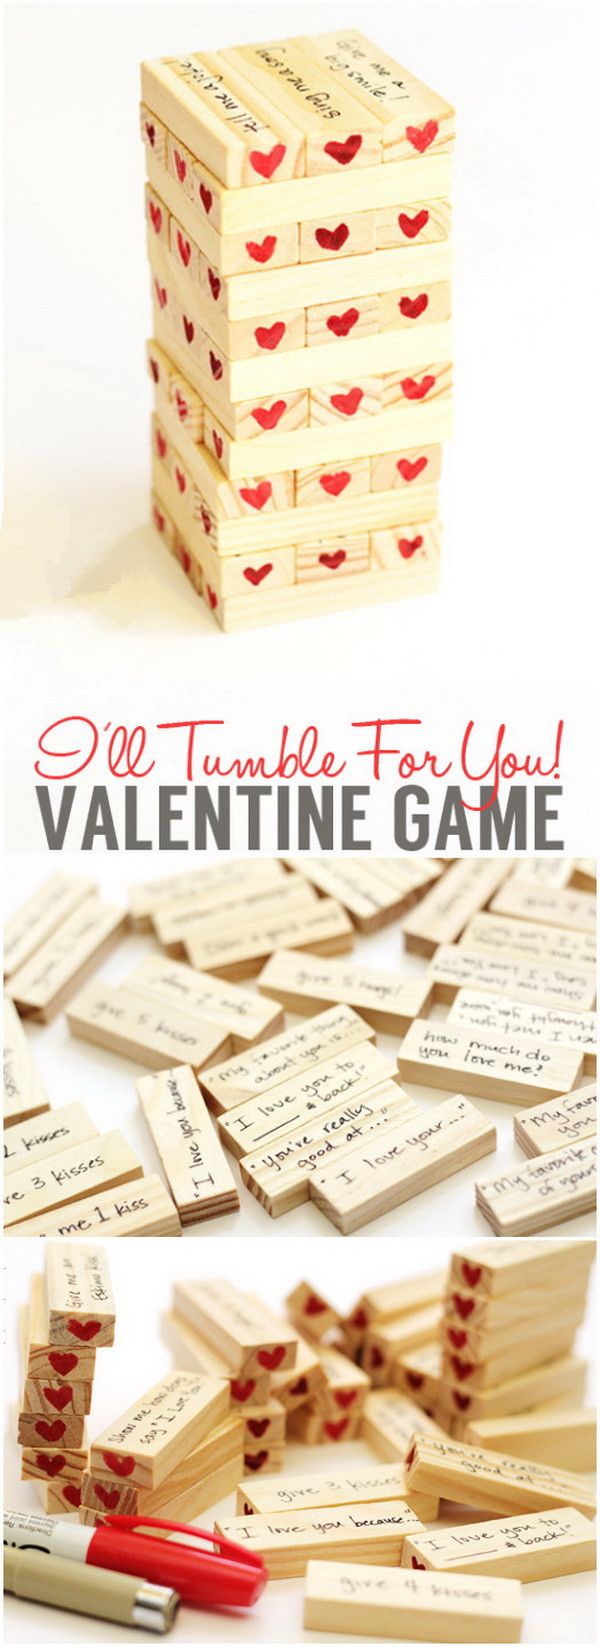 Ideas For Valentine Gift For Boyfriend
 Easy DIY Valentine s Day Gifts for Boyfriend Listing More